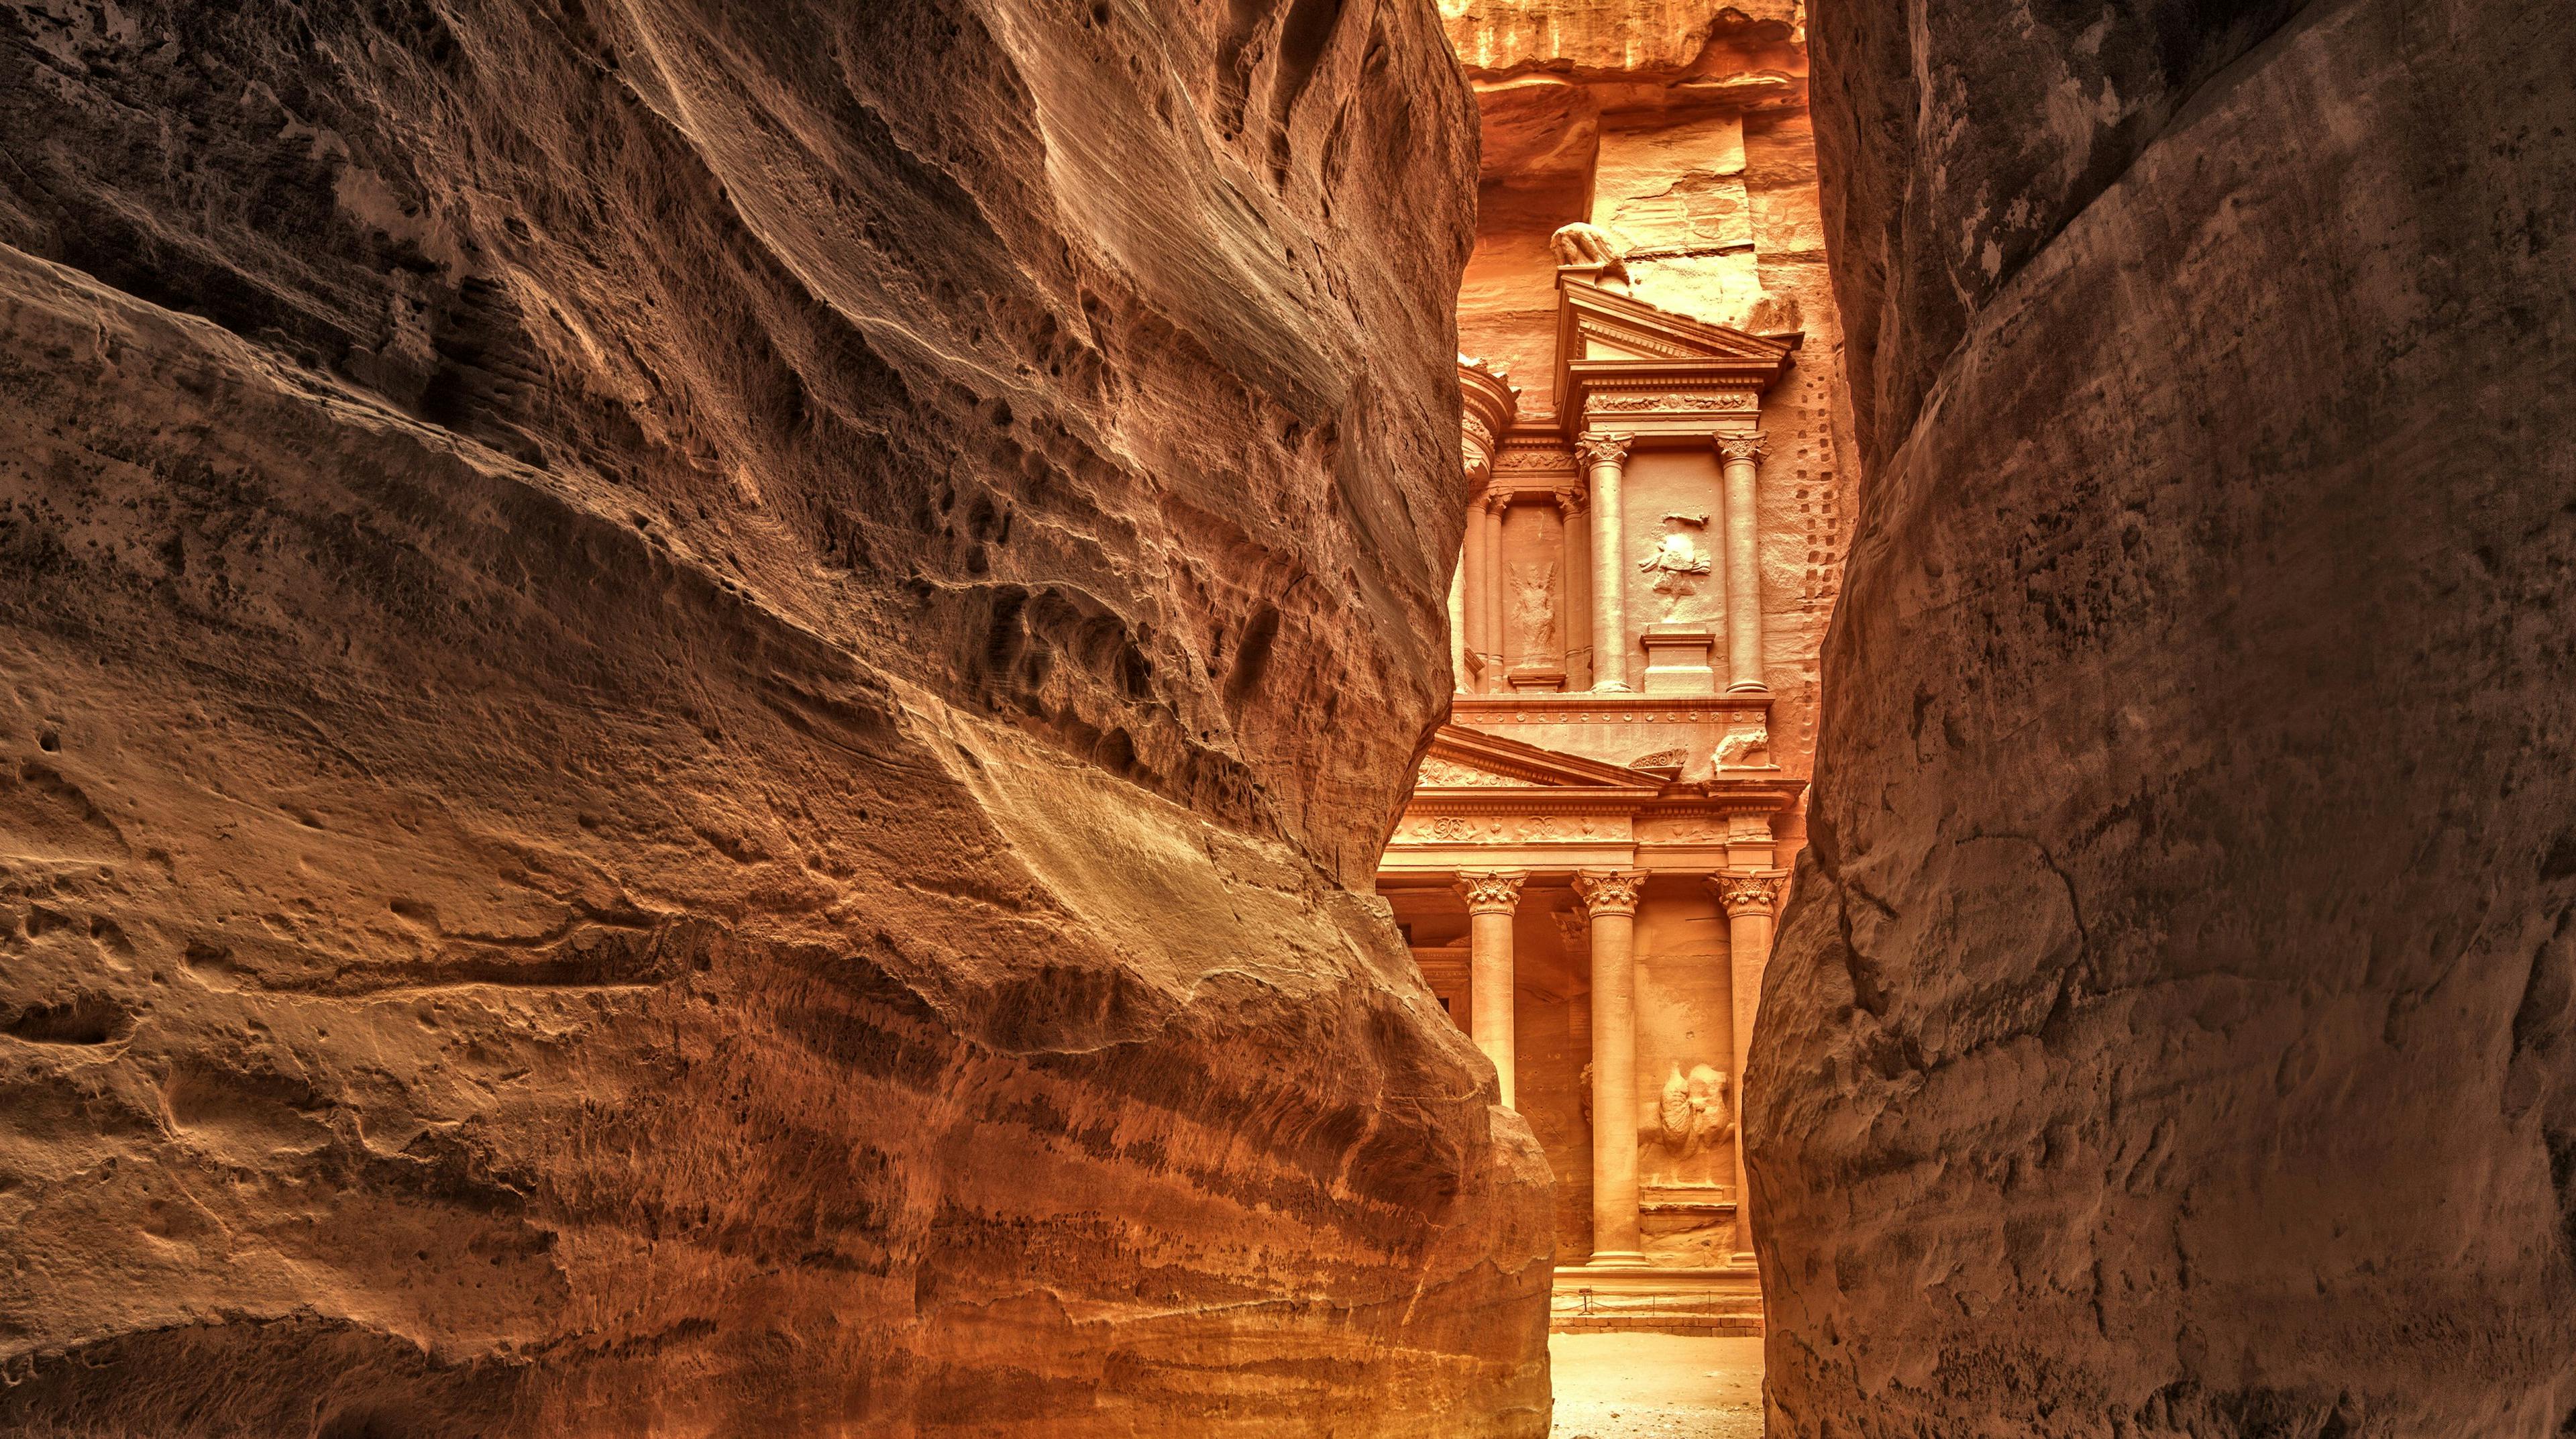 Siq in Ancient City of Petra, Jordan | Image Credit: © klemenr - stock.adobe.com